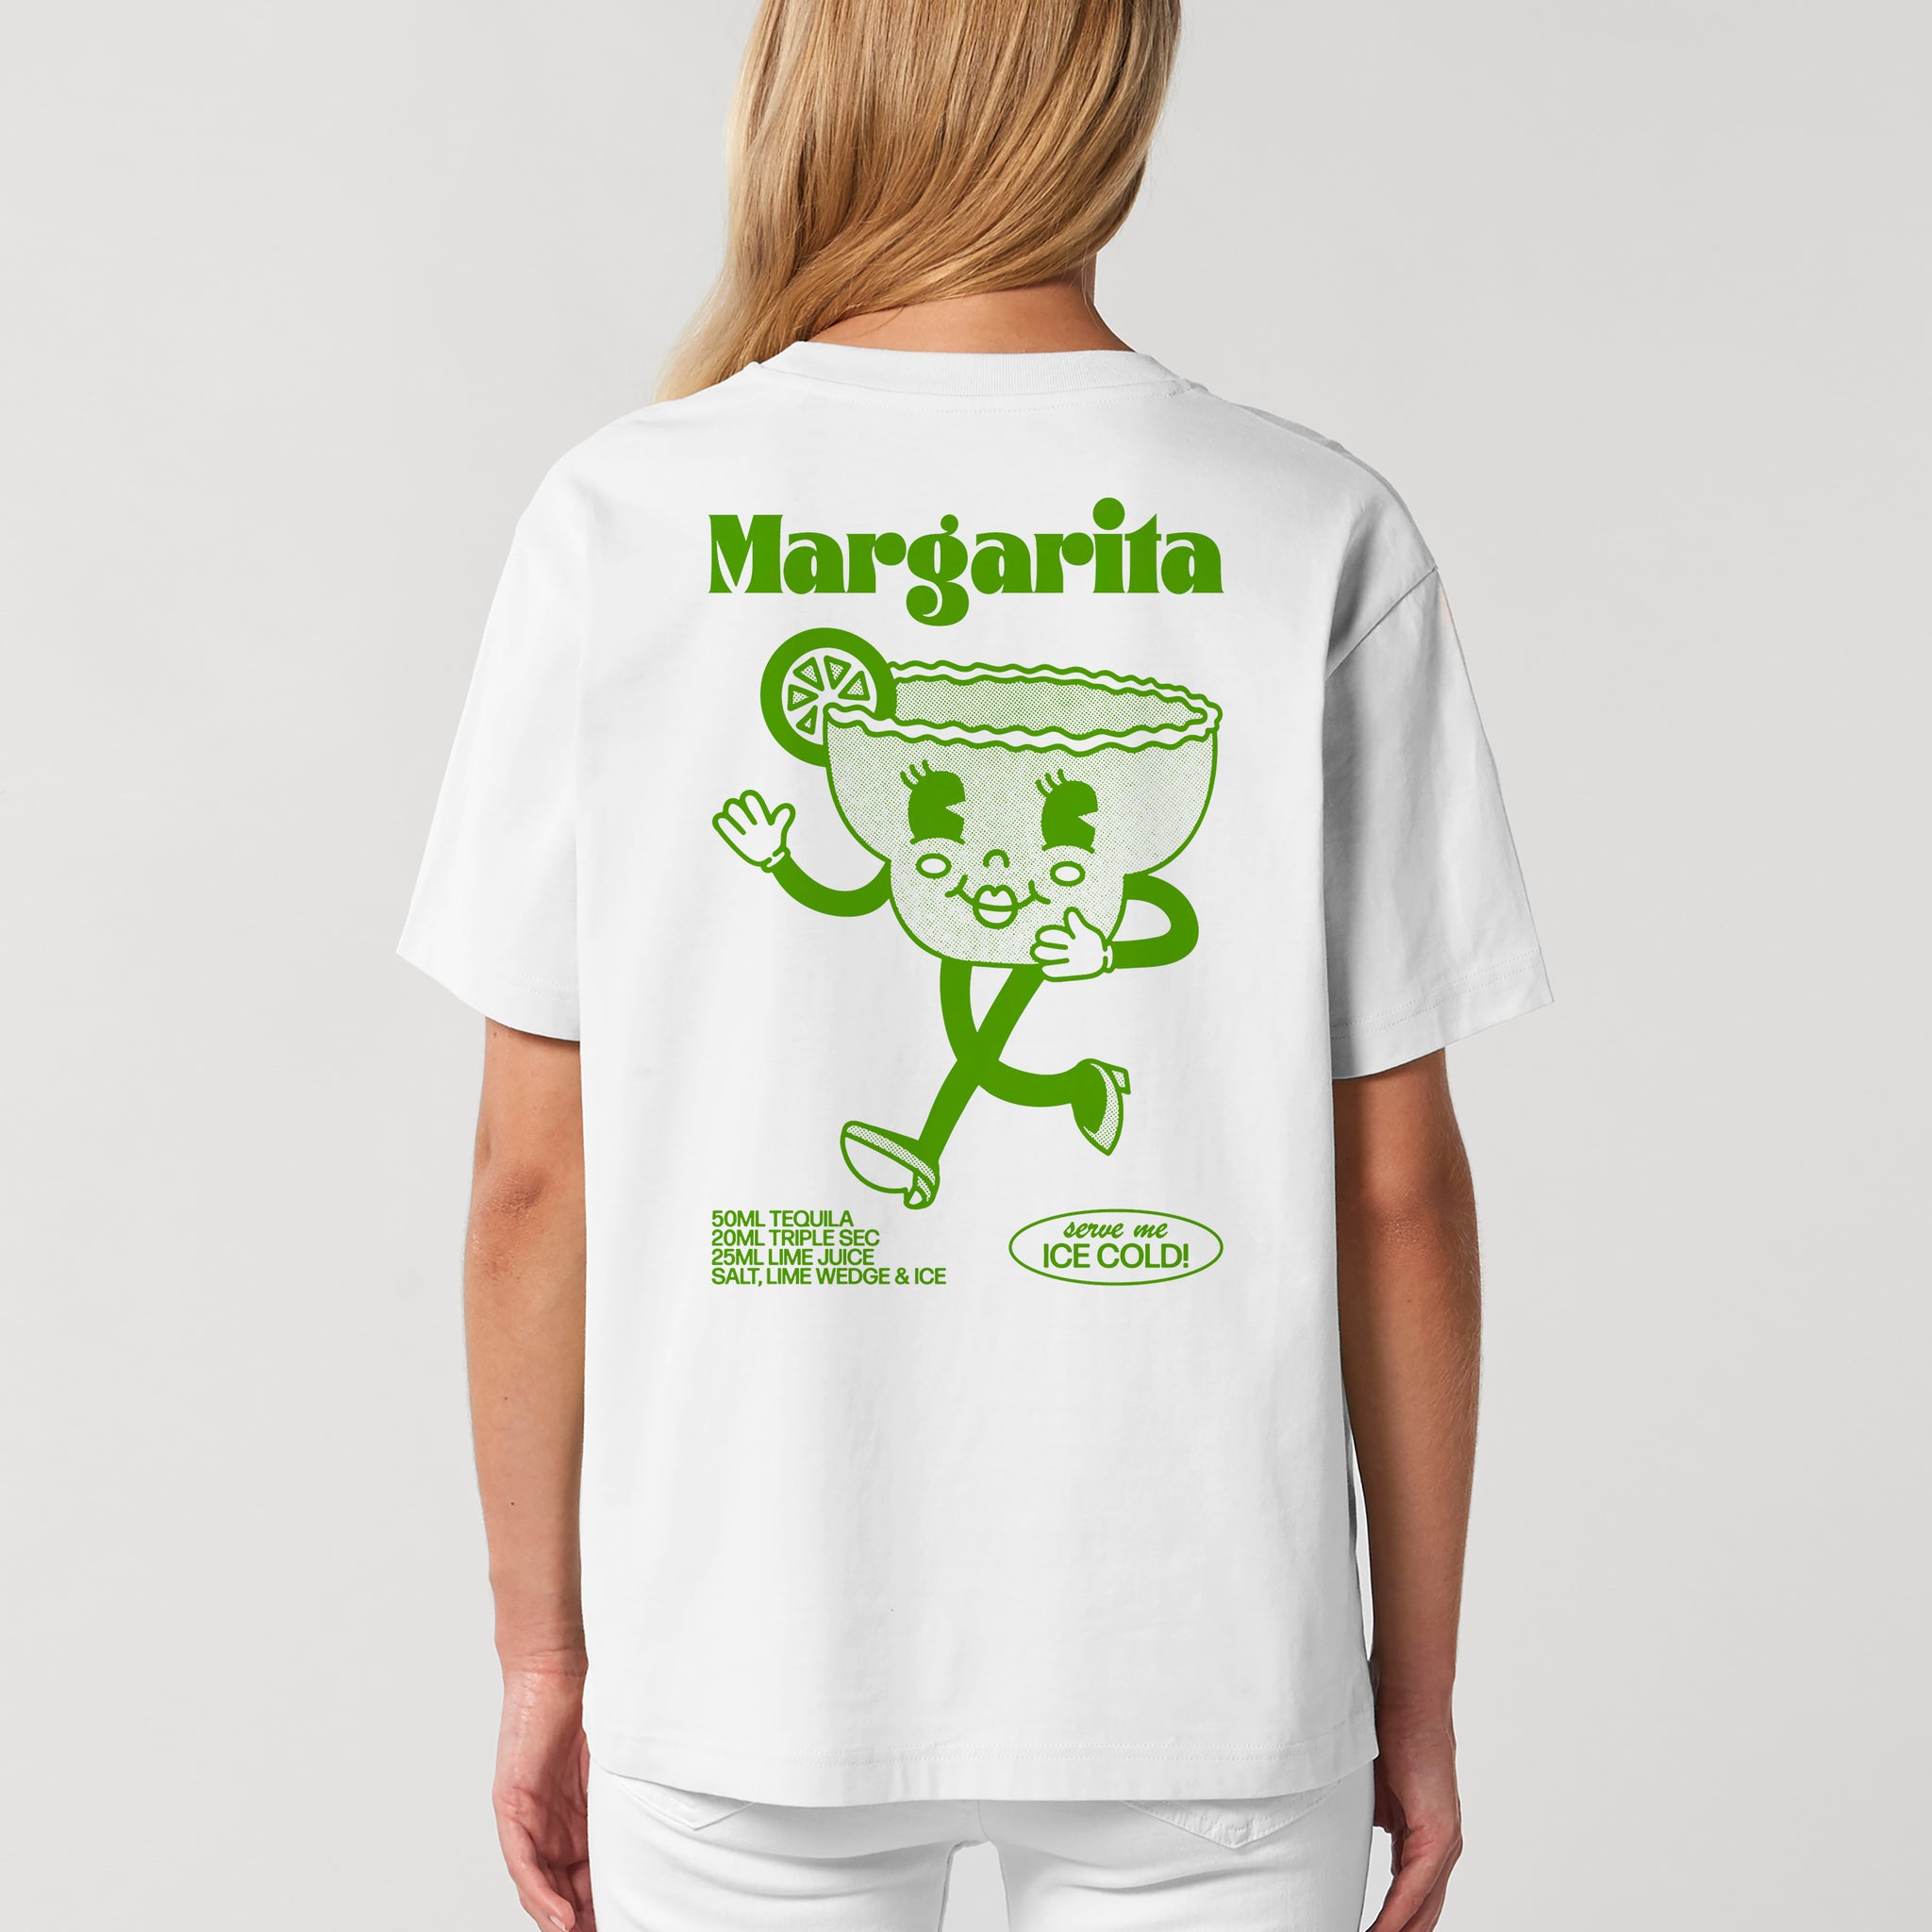 'Margarita' Short Sleeve Organic Cotton T-shirt